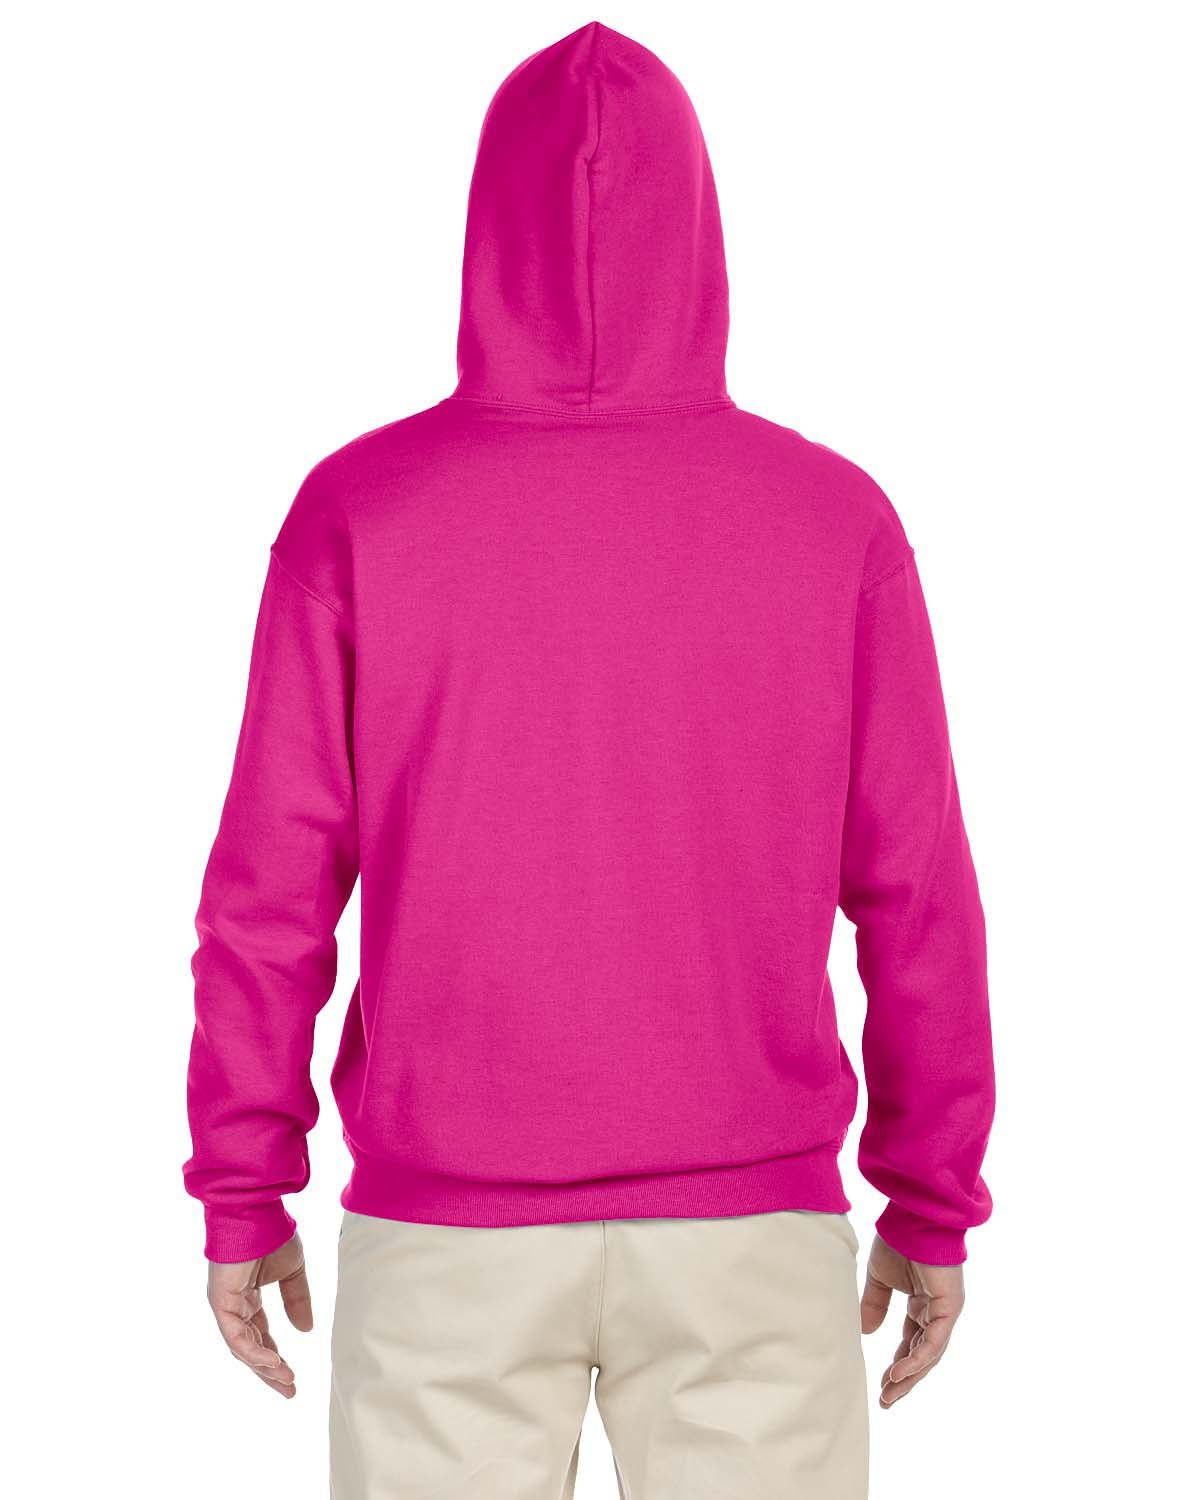 Kennedy Todd Men's Pullover Hooded Sweatshirt